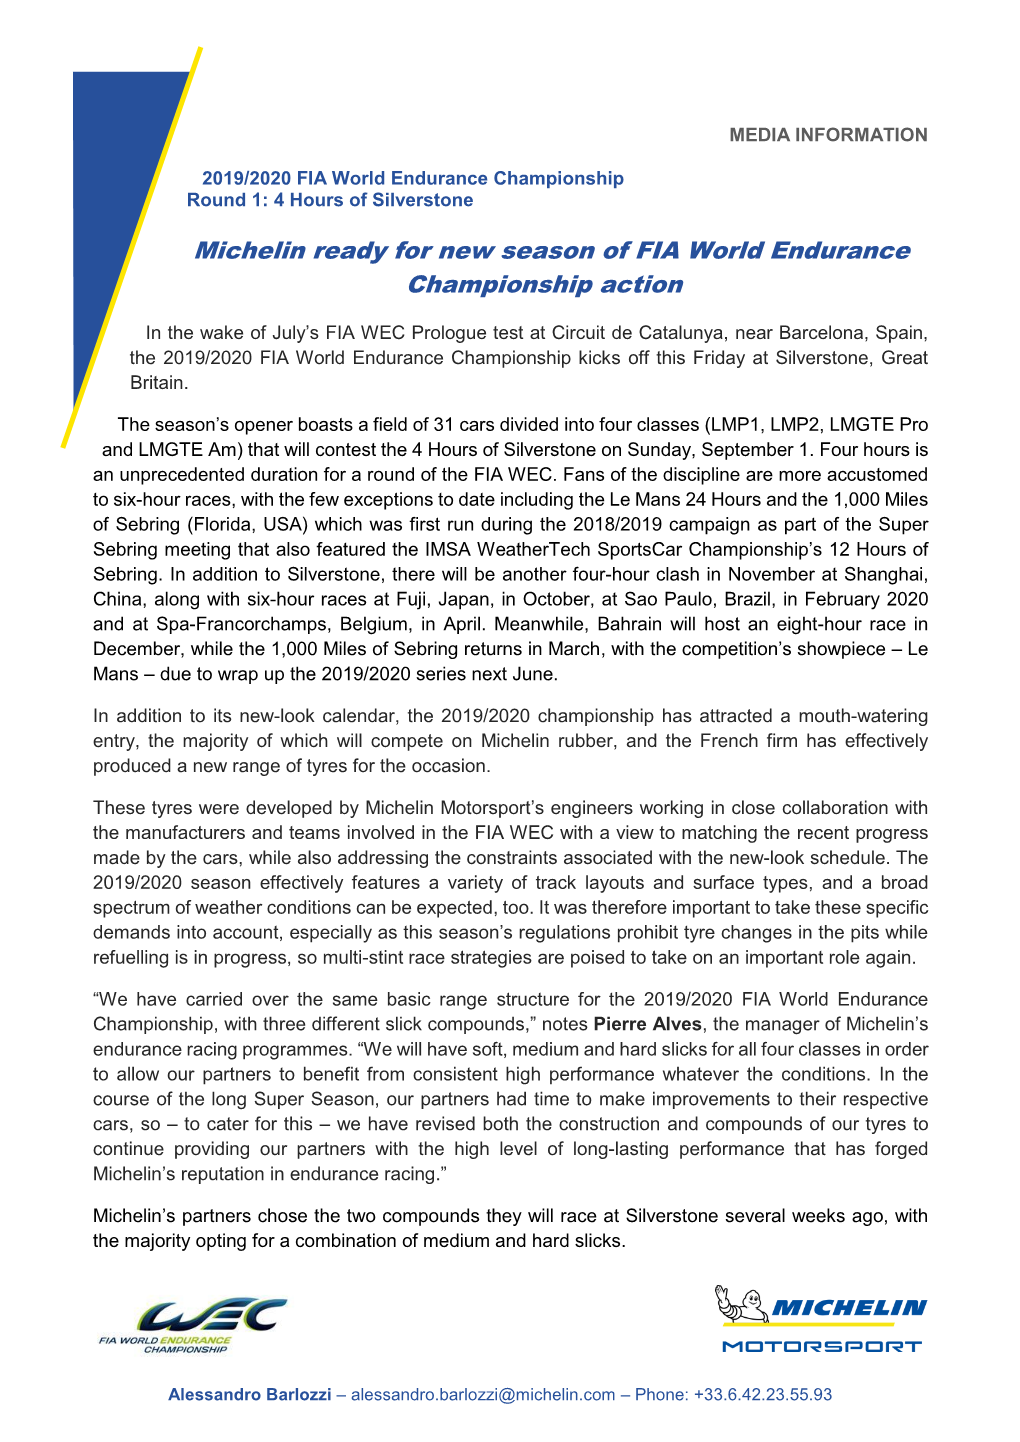 Michelin Ready for New Season of FIA World Endurance Championship Action